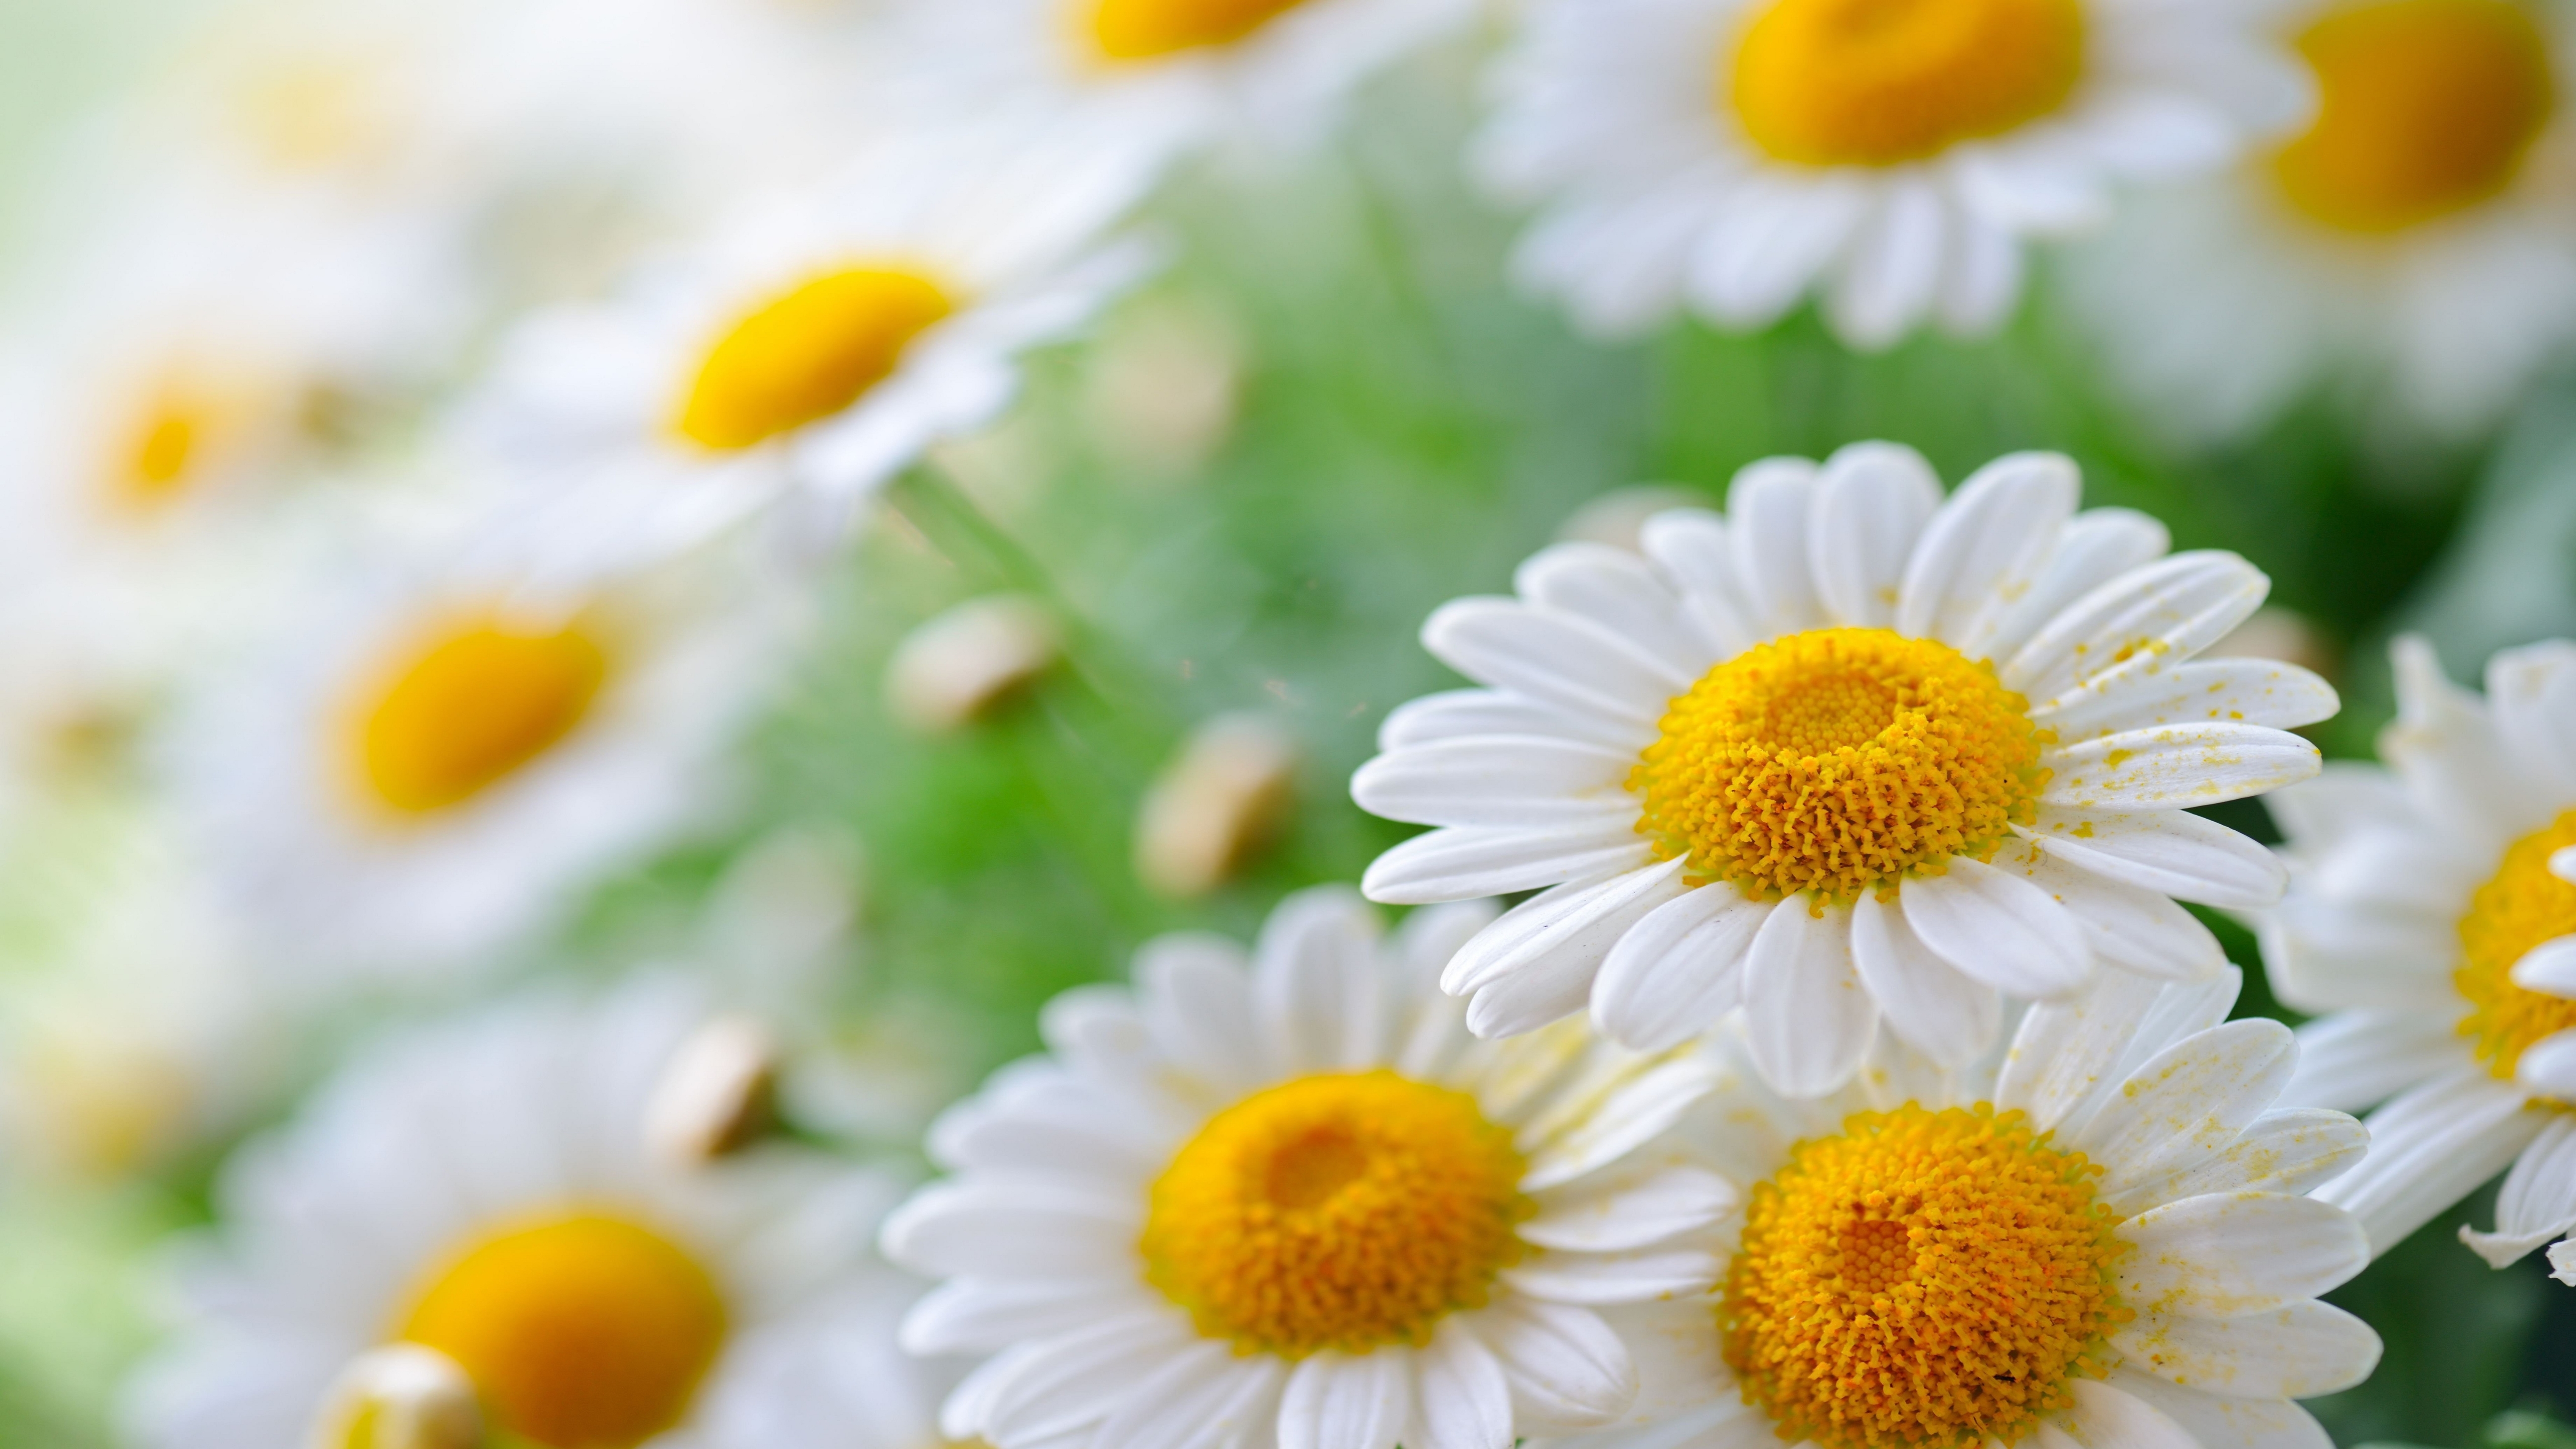 Daisy Flower for 5120 x 2880 5K Ultra HD resolution